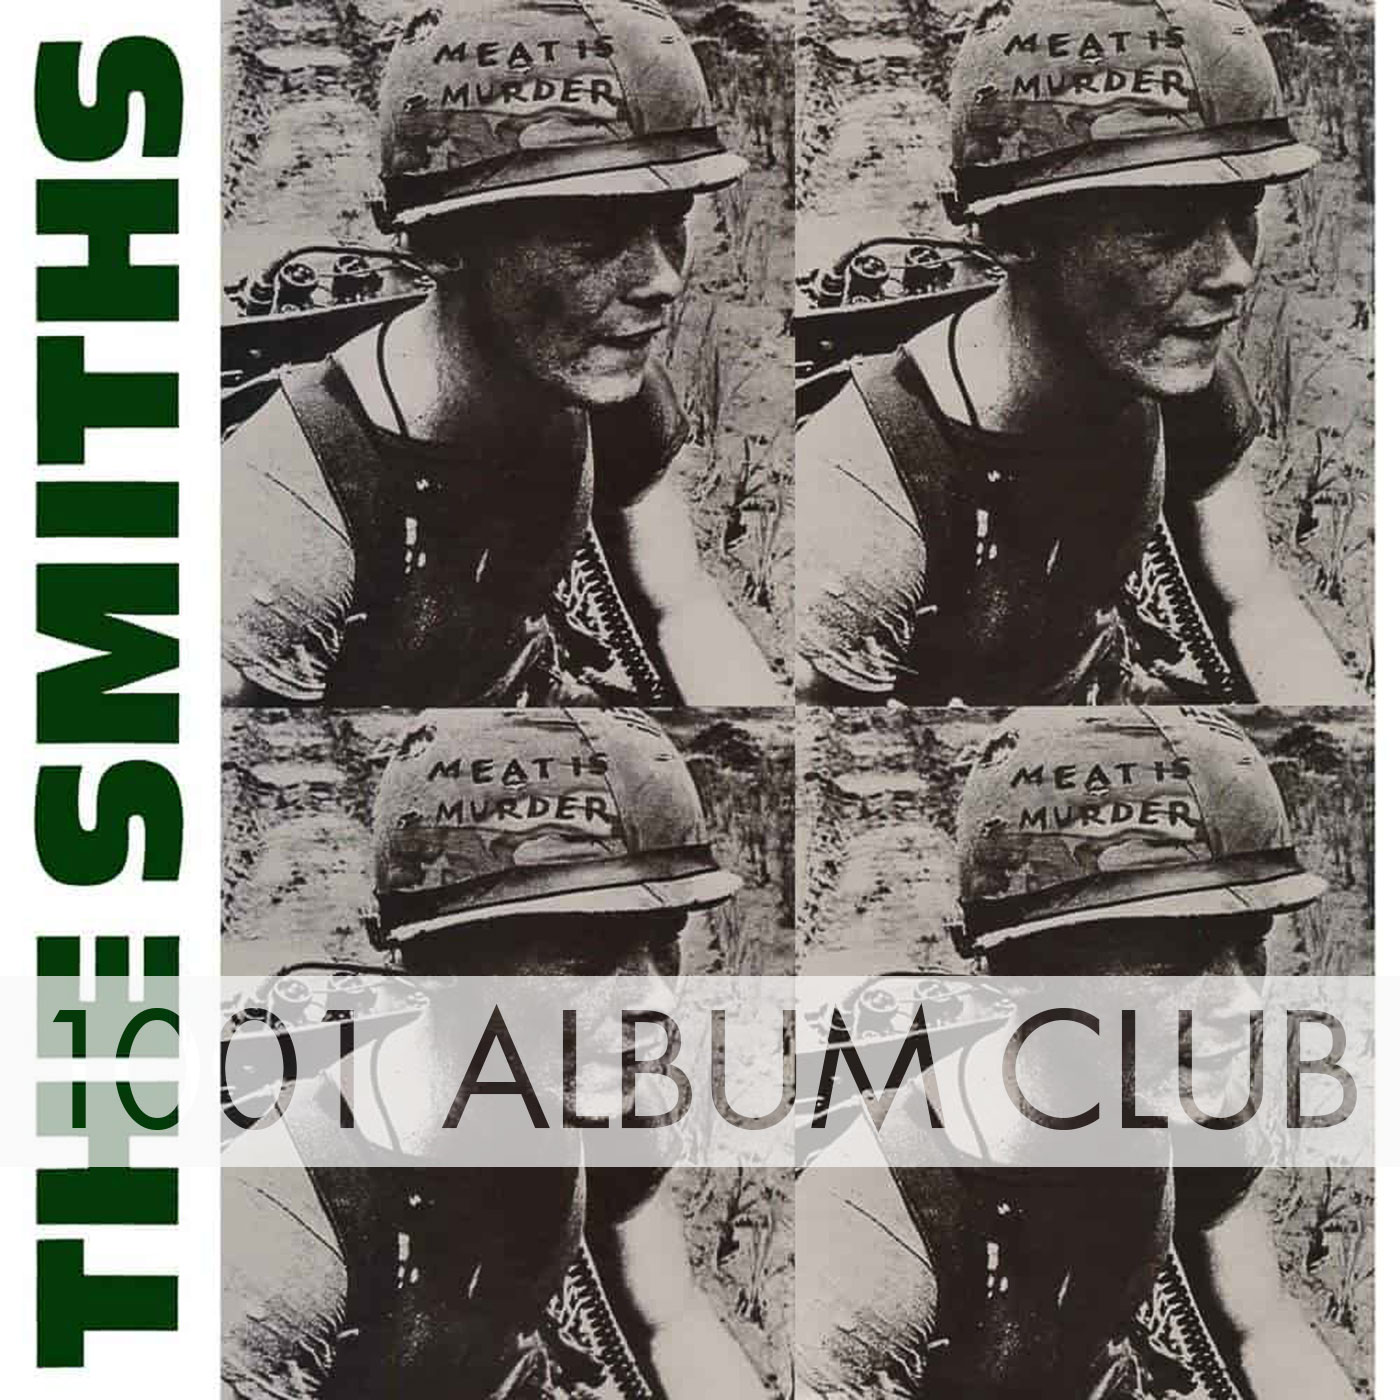 558 The Smiths – Meat Is Murder – 1001 Album Club